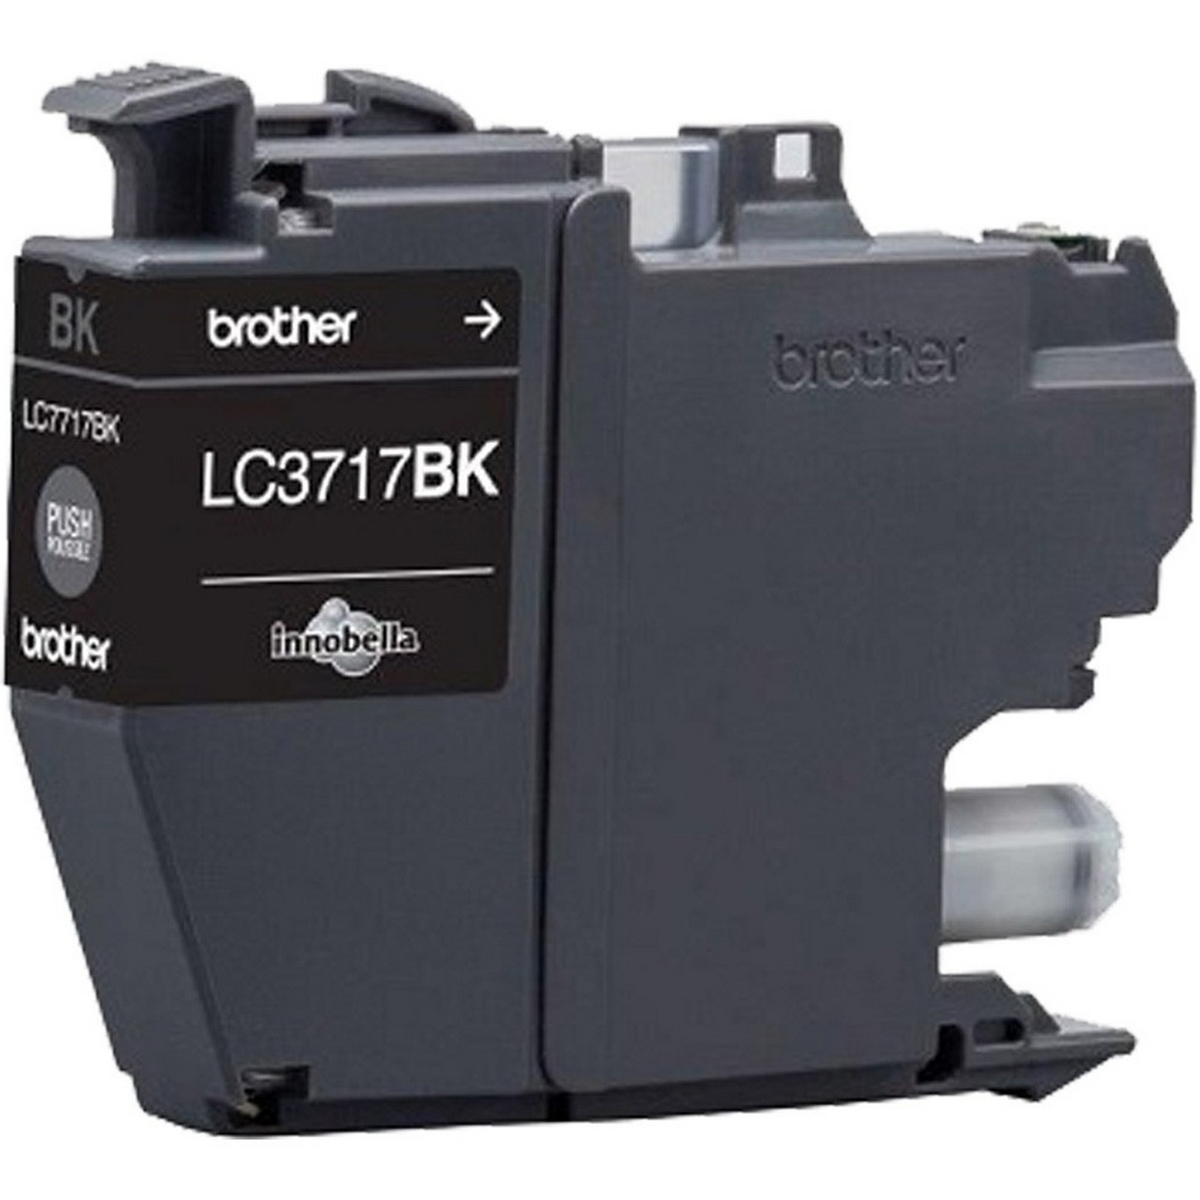 Brother Cartridge LC3717BK - Black